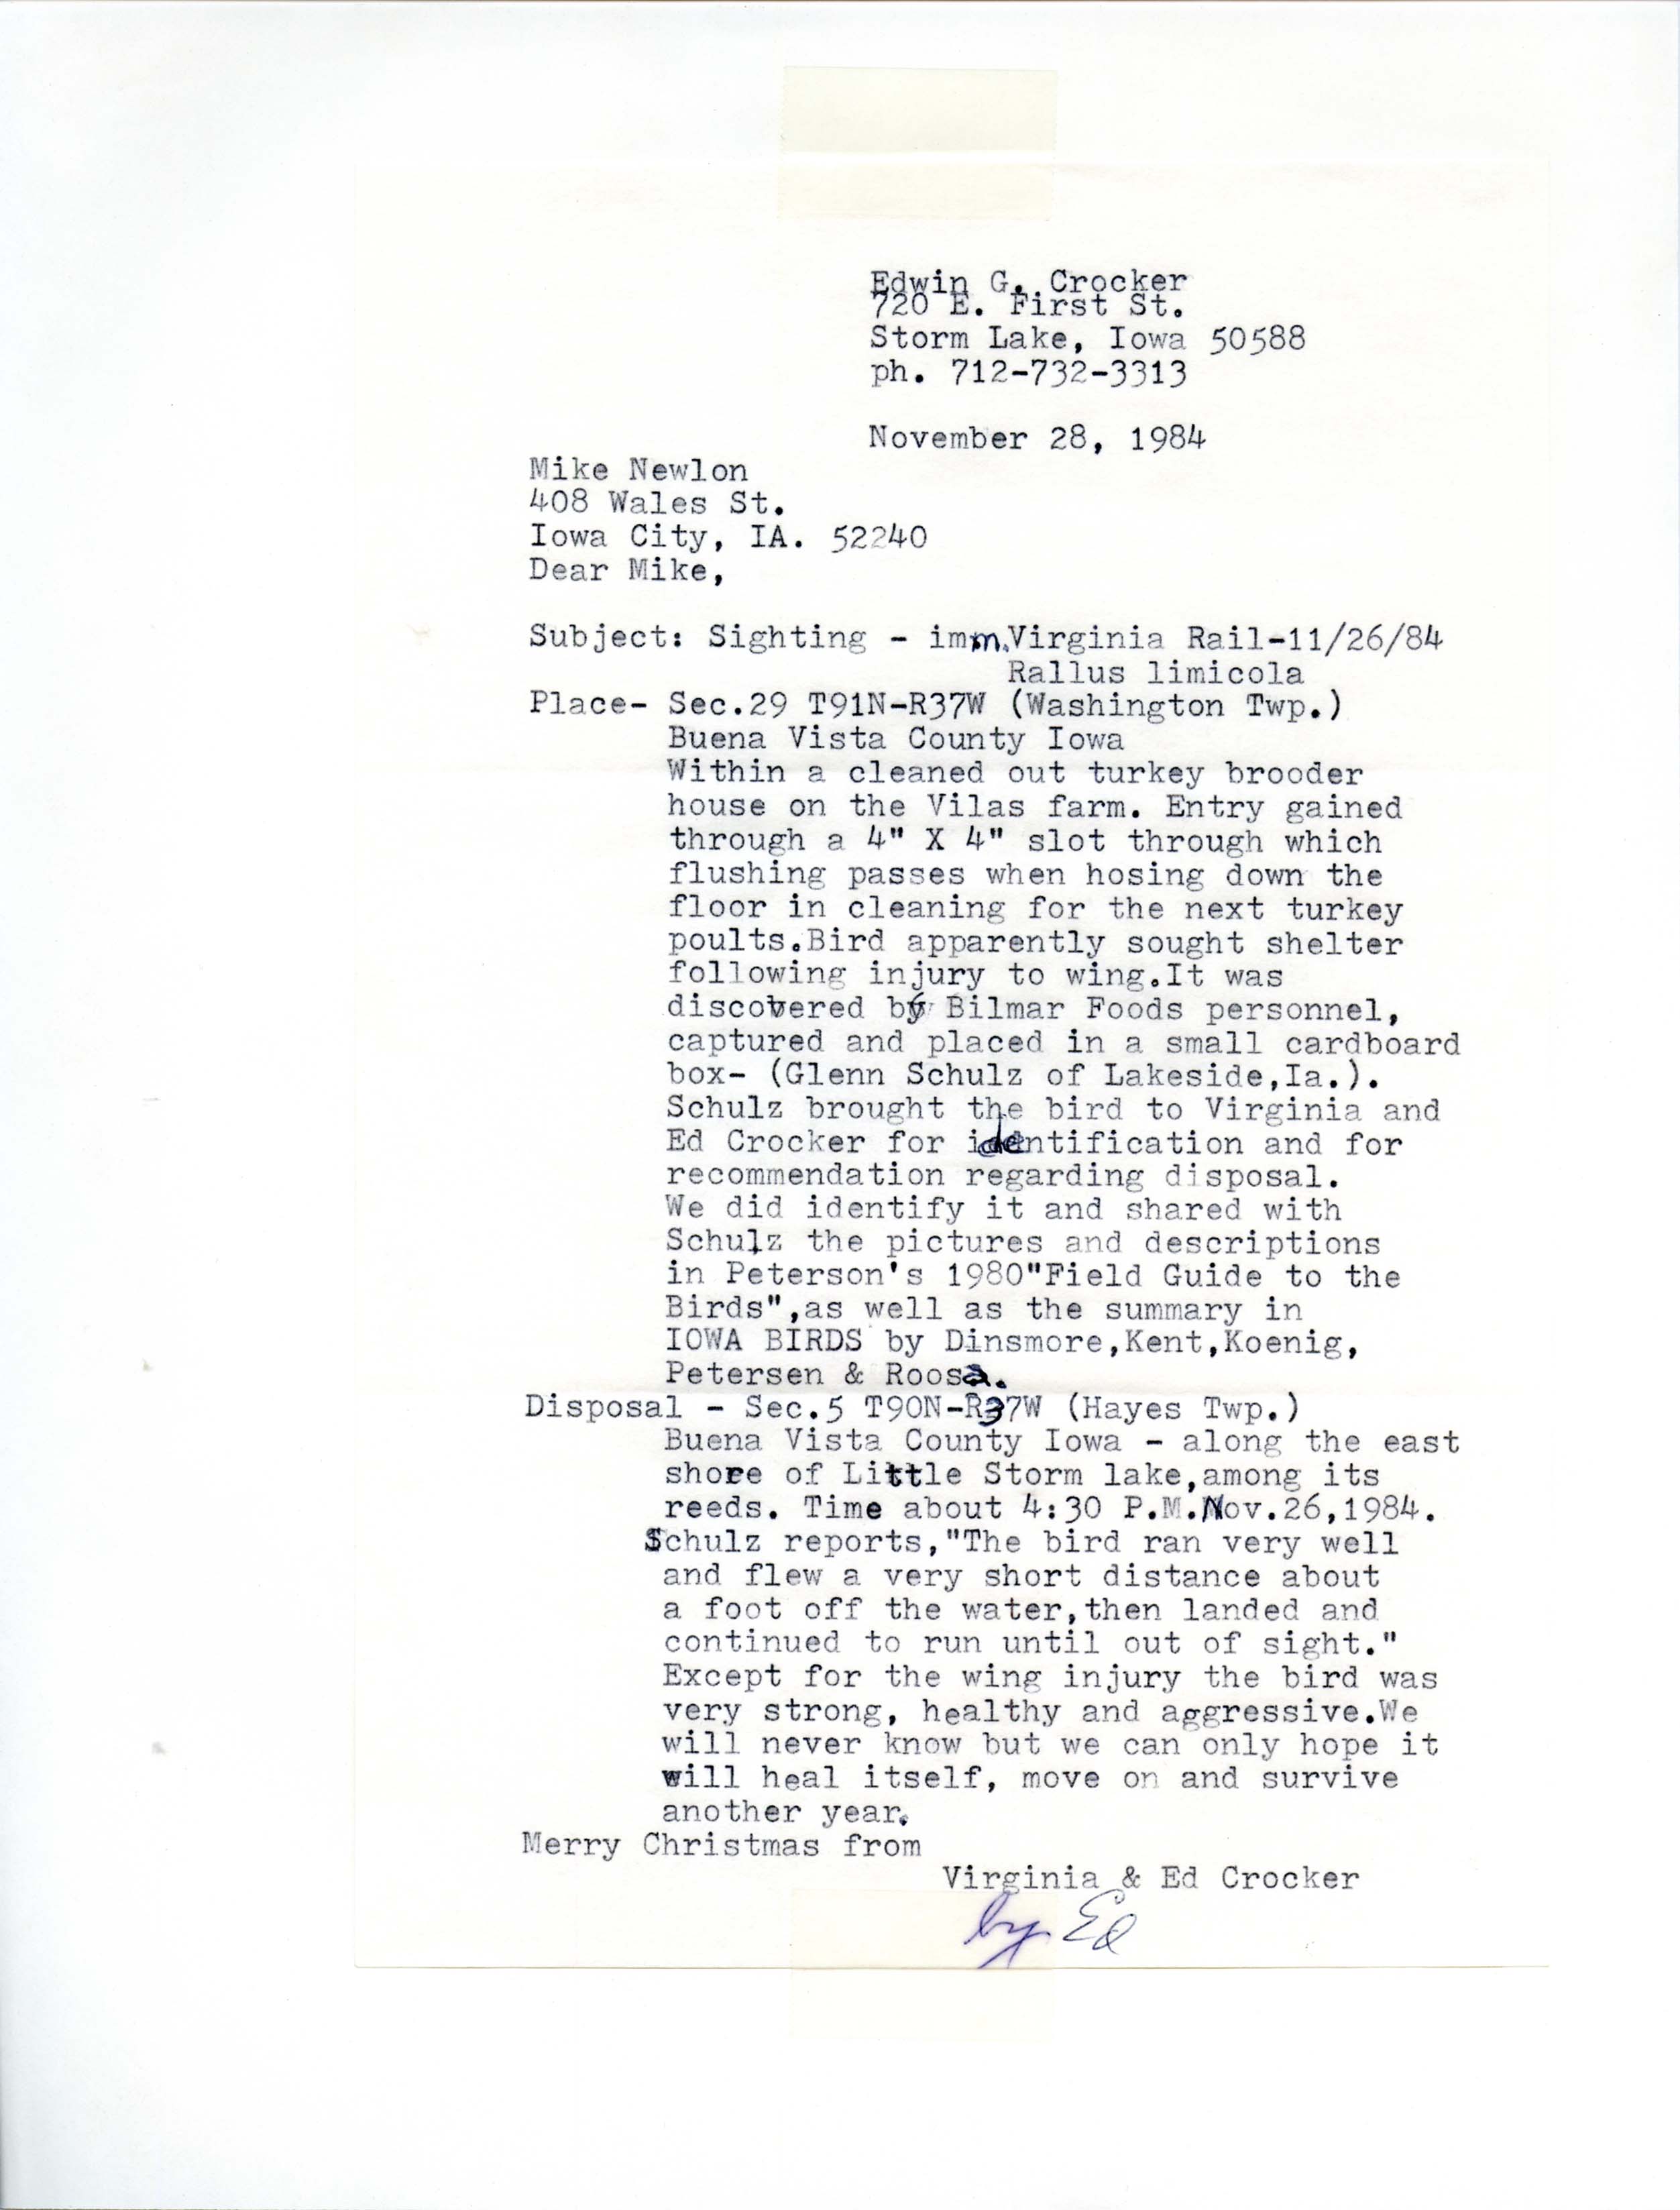 Edwin G. Crocker letter to Mike Newlon regarding the sighting of a Virginia Rail, November 28, 1984